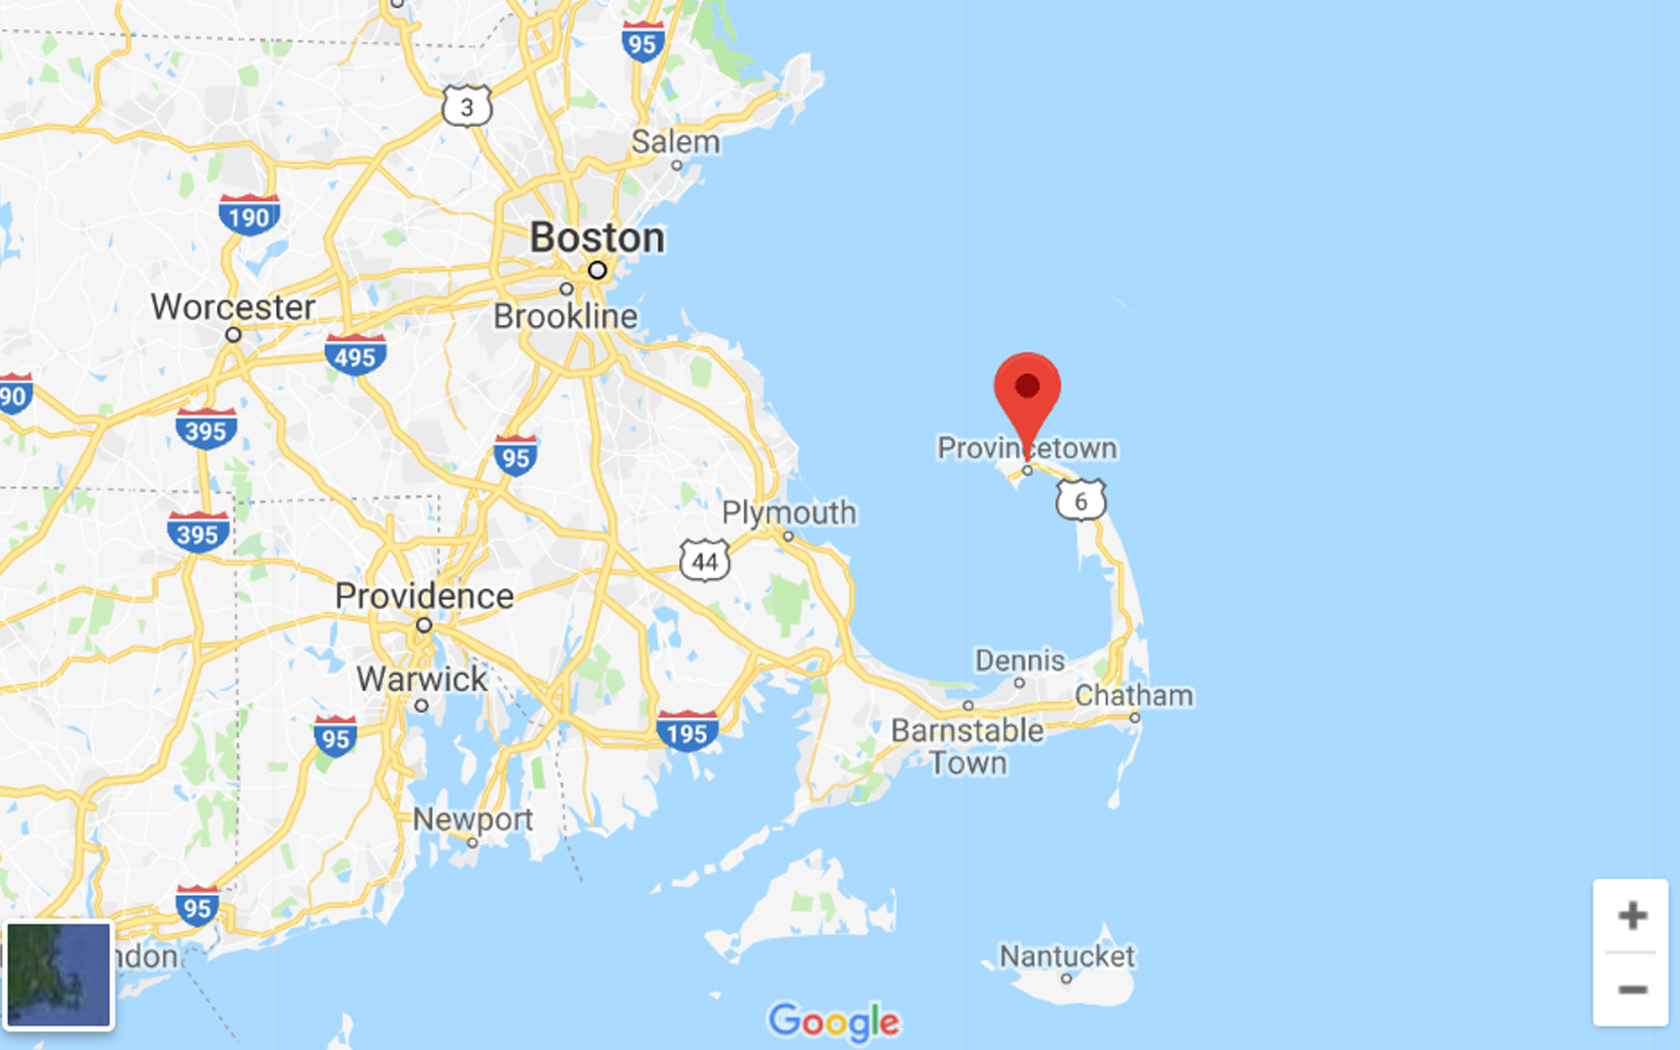 Uma terra portuguesa na costa dos Estados Unidos?